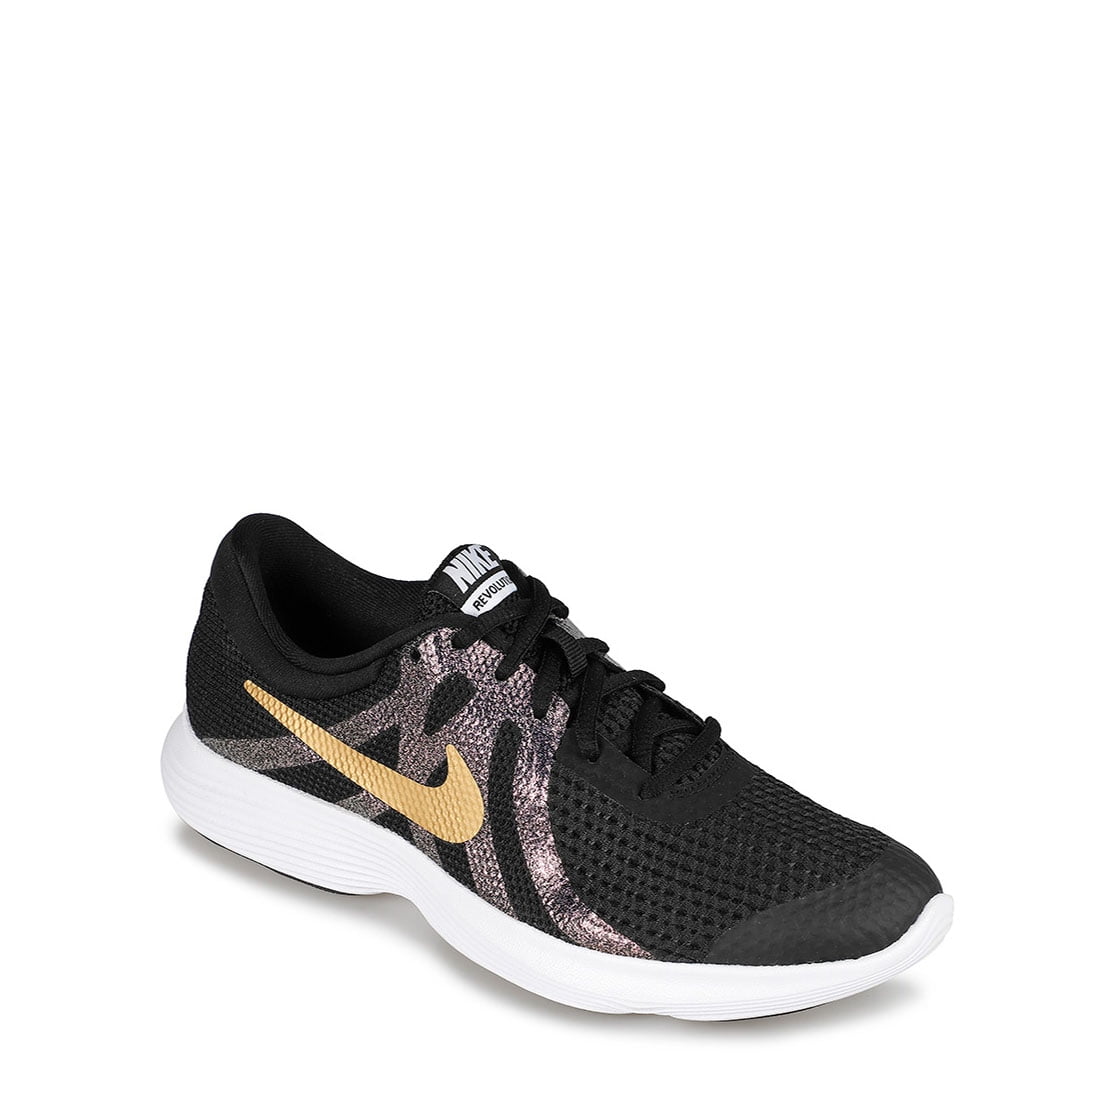 Nike Revolution 4 Athletic Sneakers shoe size 5 Casual AV4484-001 Black Gold - Walmart.com